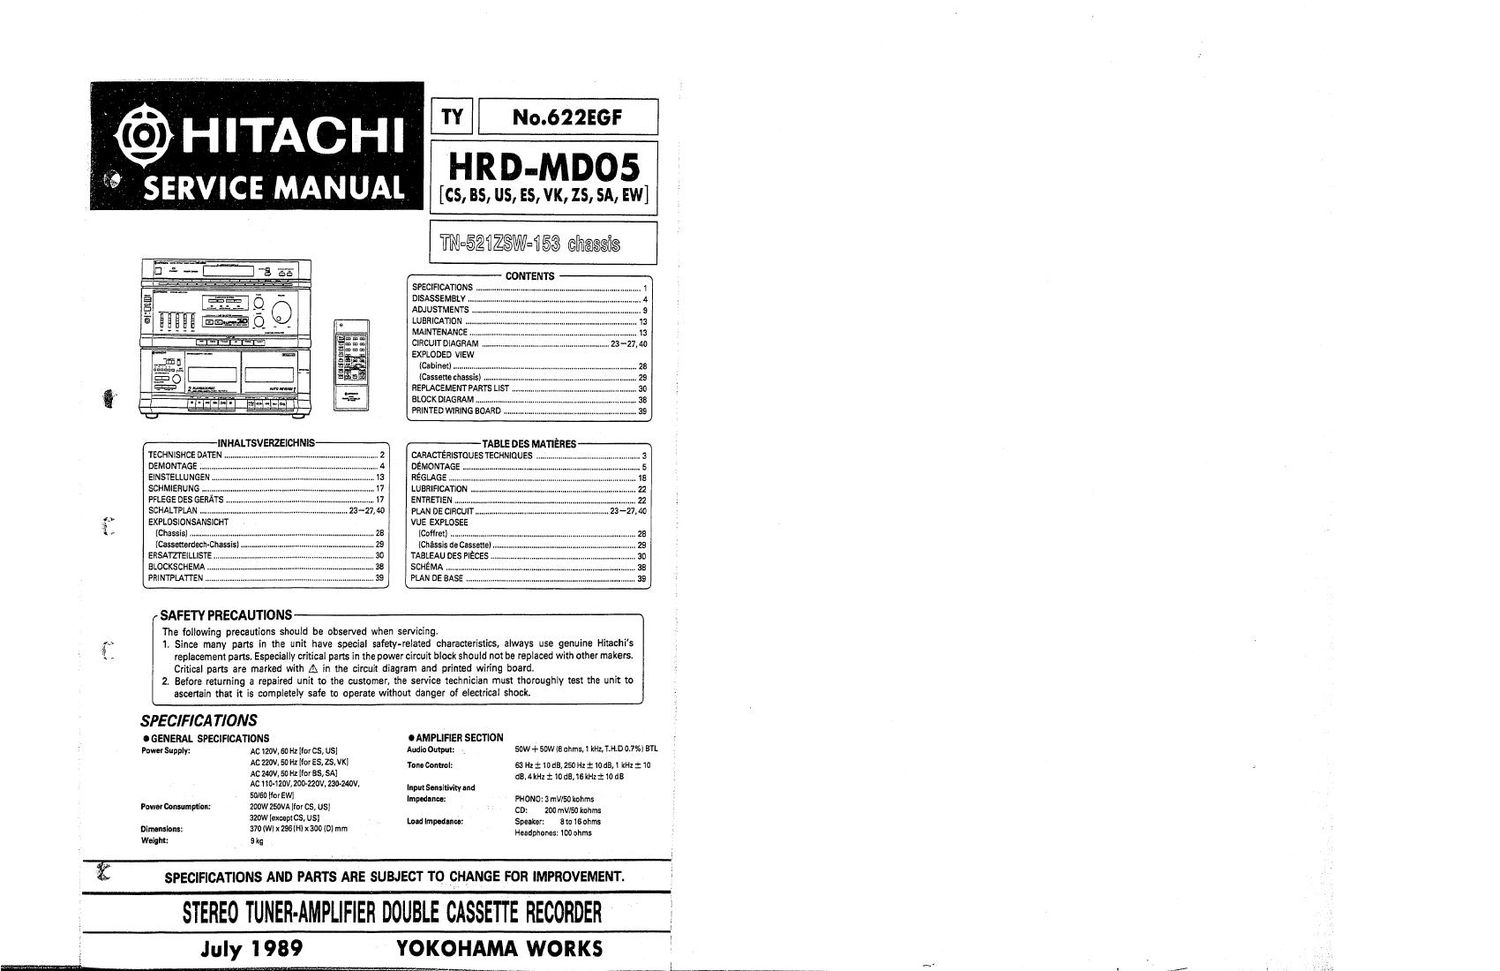 Hitachi HRDMD 05 Service Manual